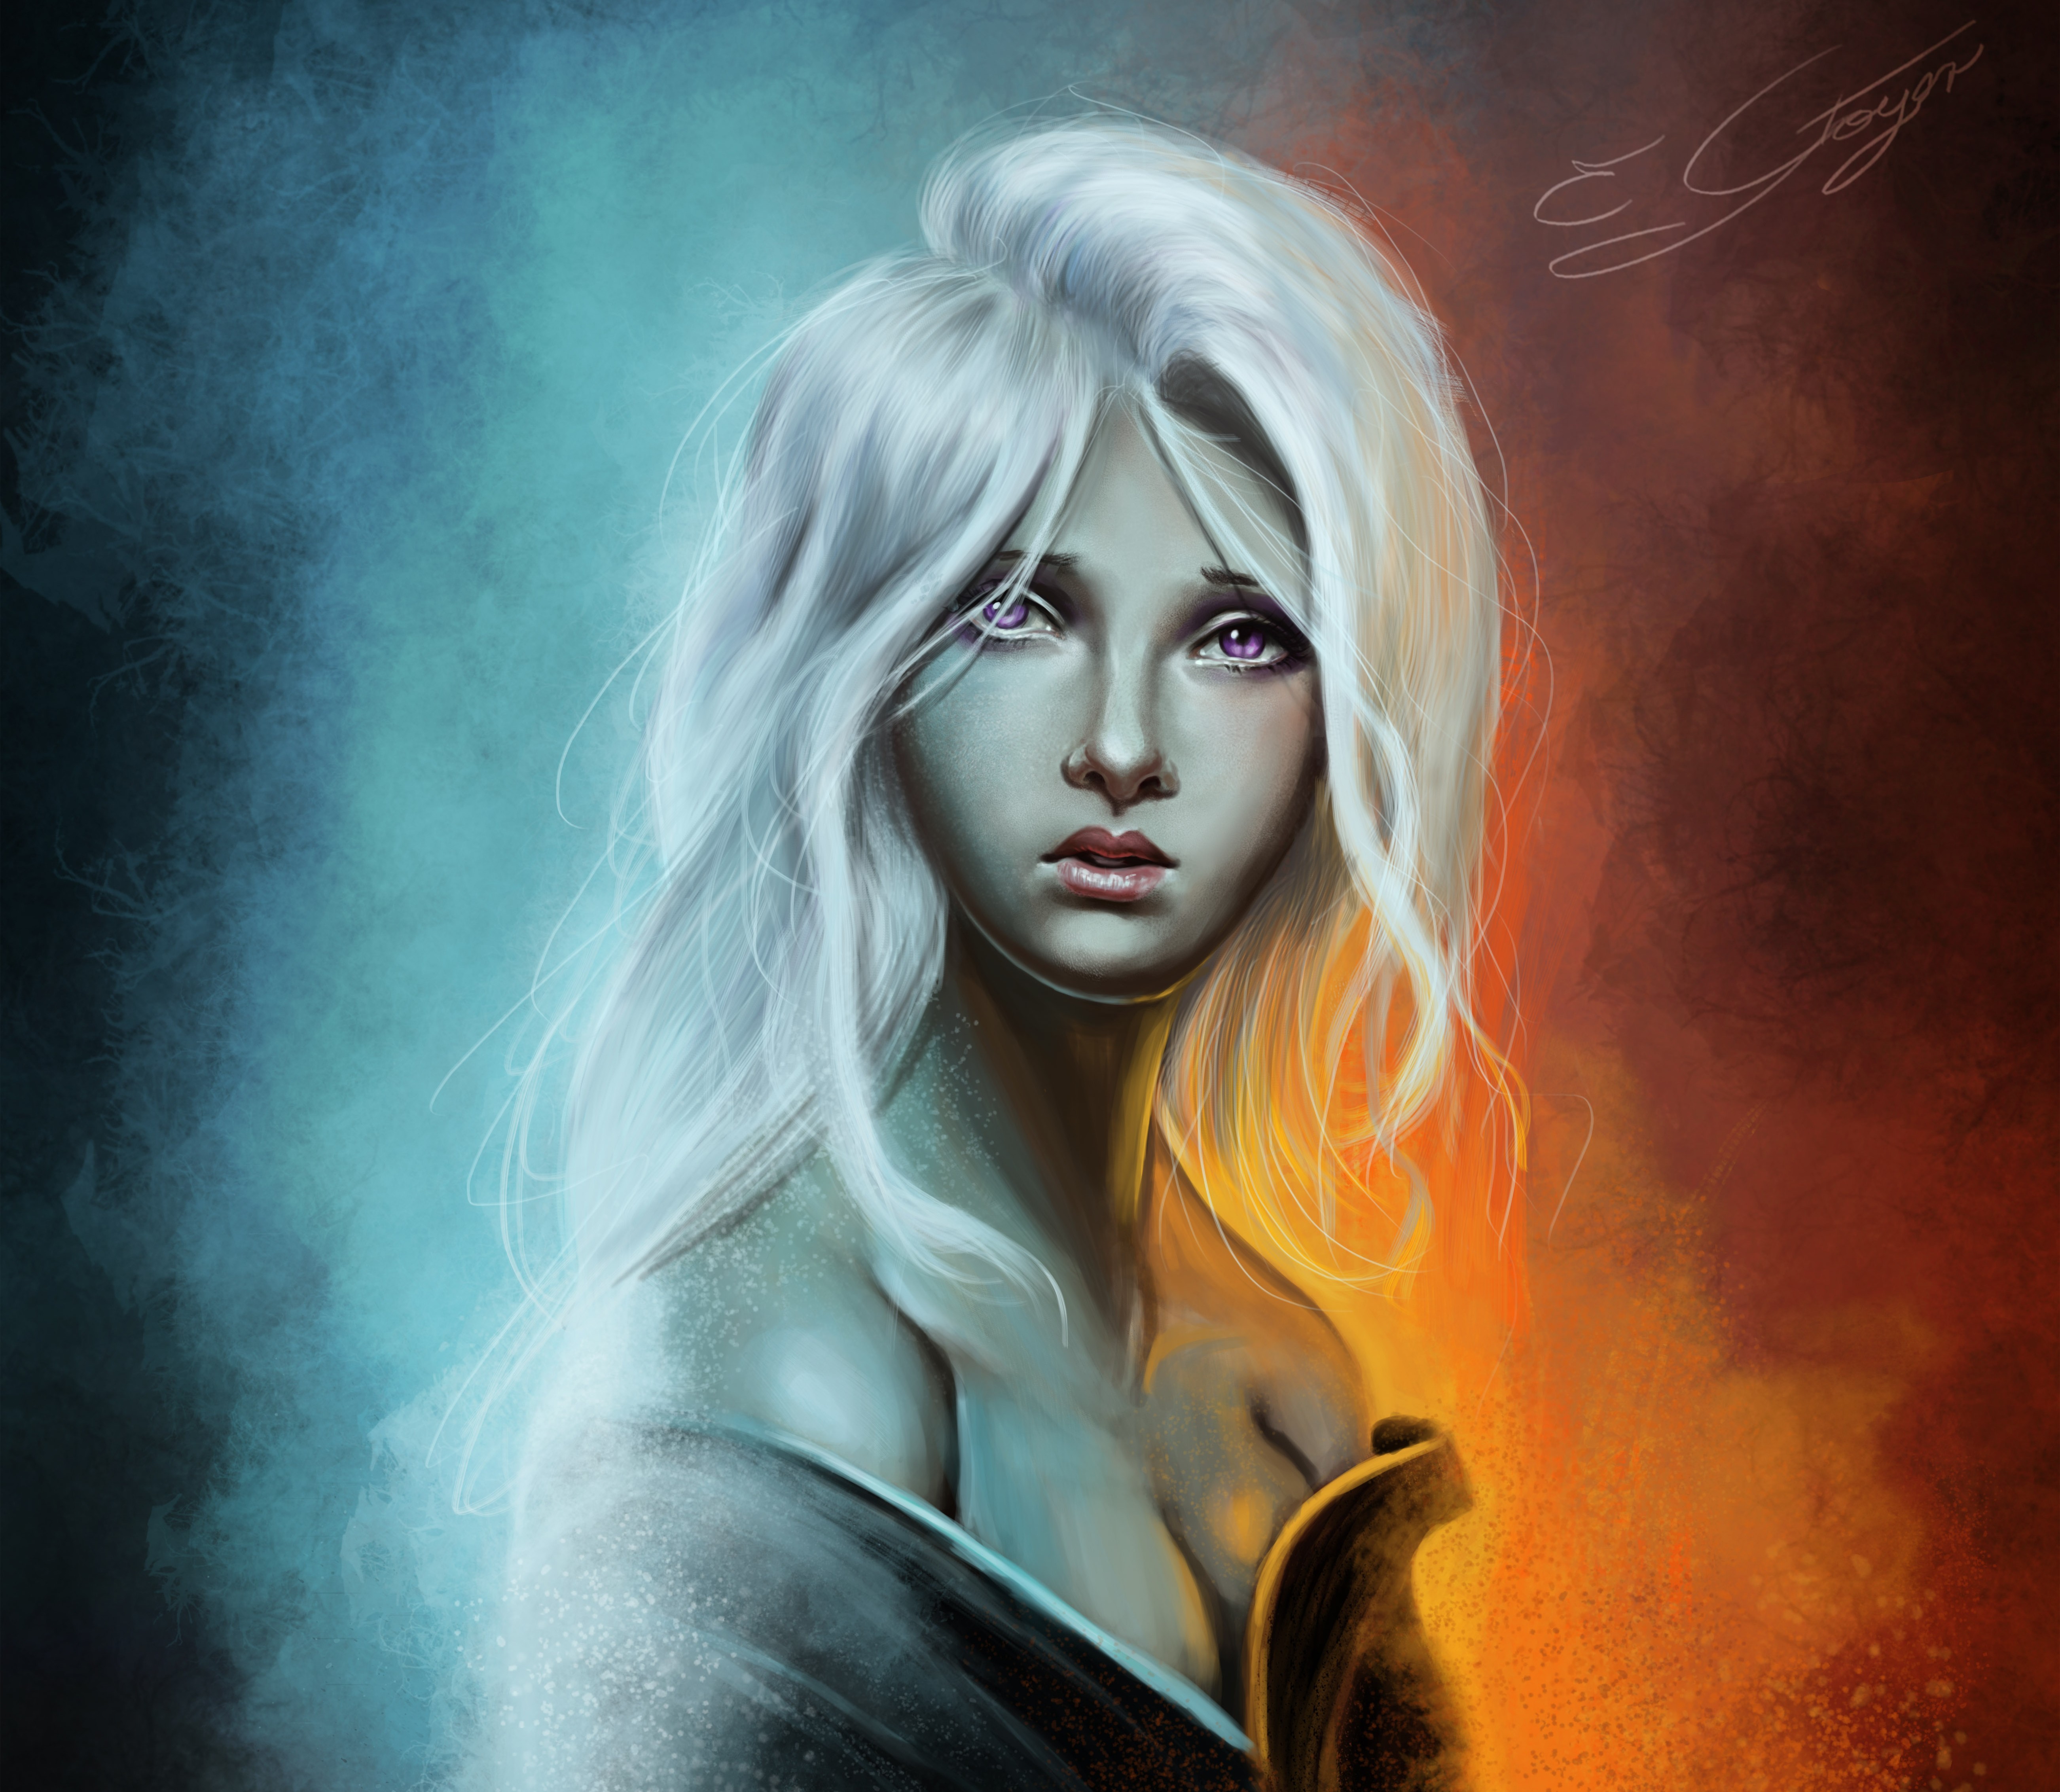 Daenerys Targaryen painting illustration digital art hd wallpaper